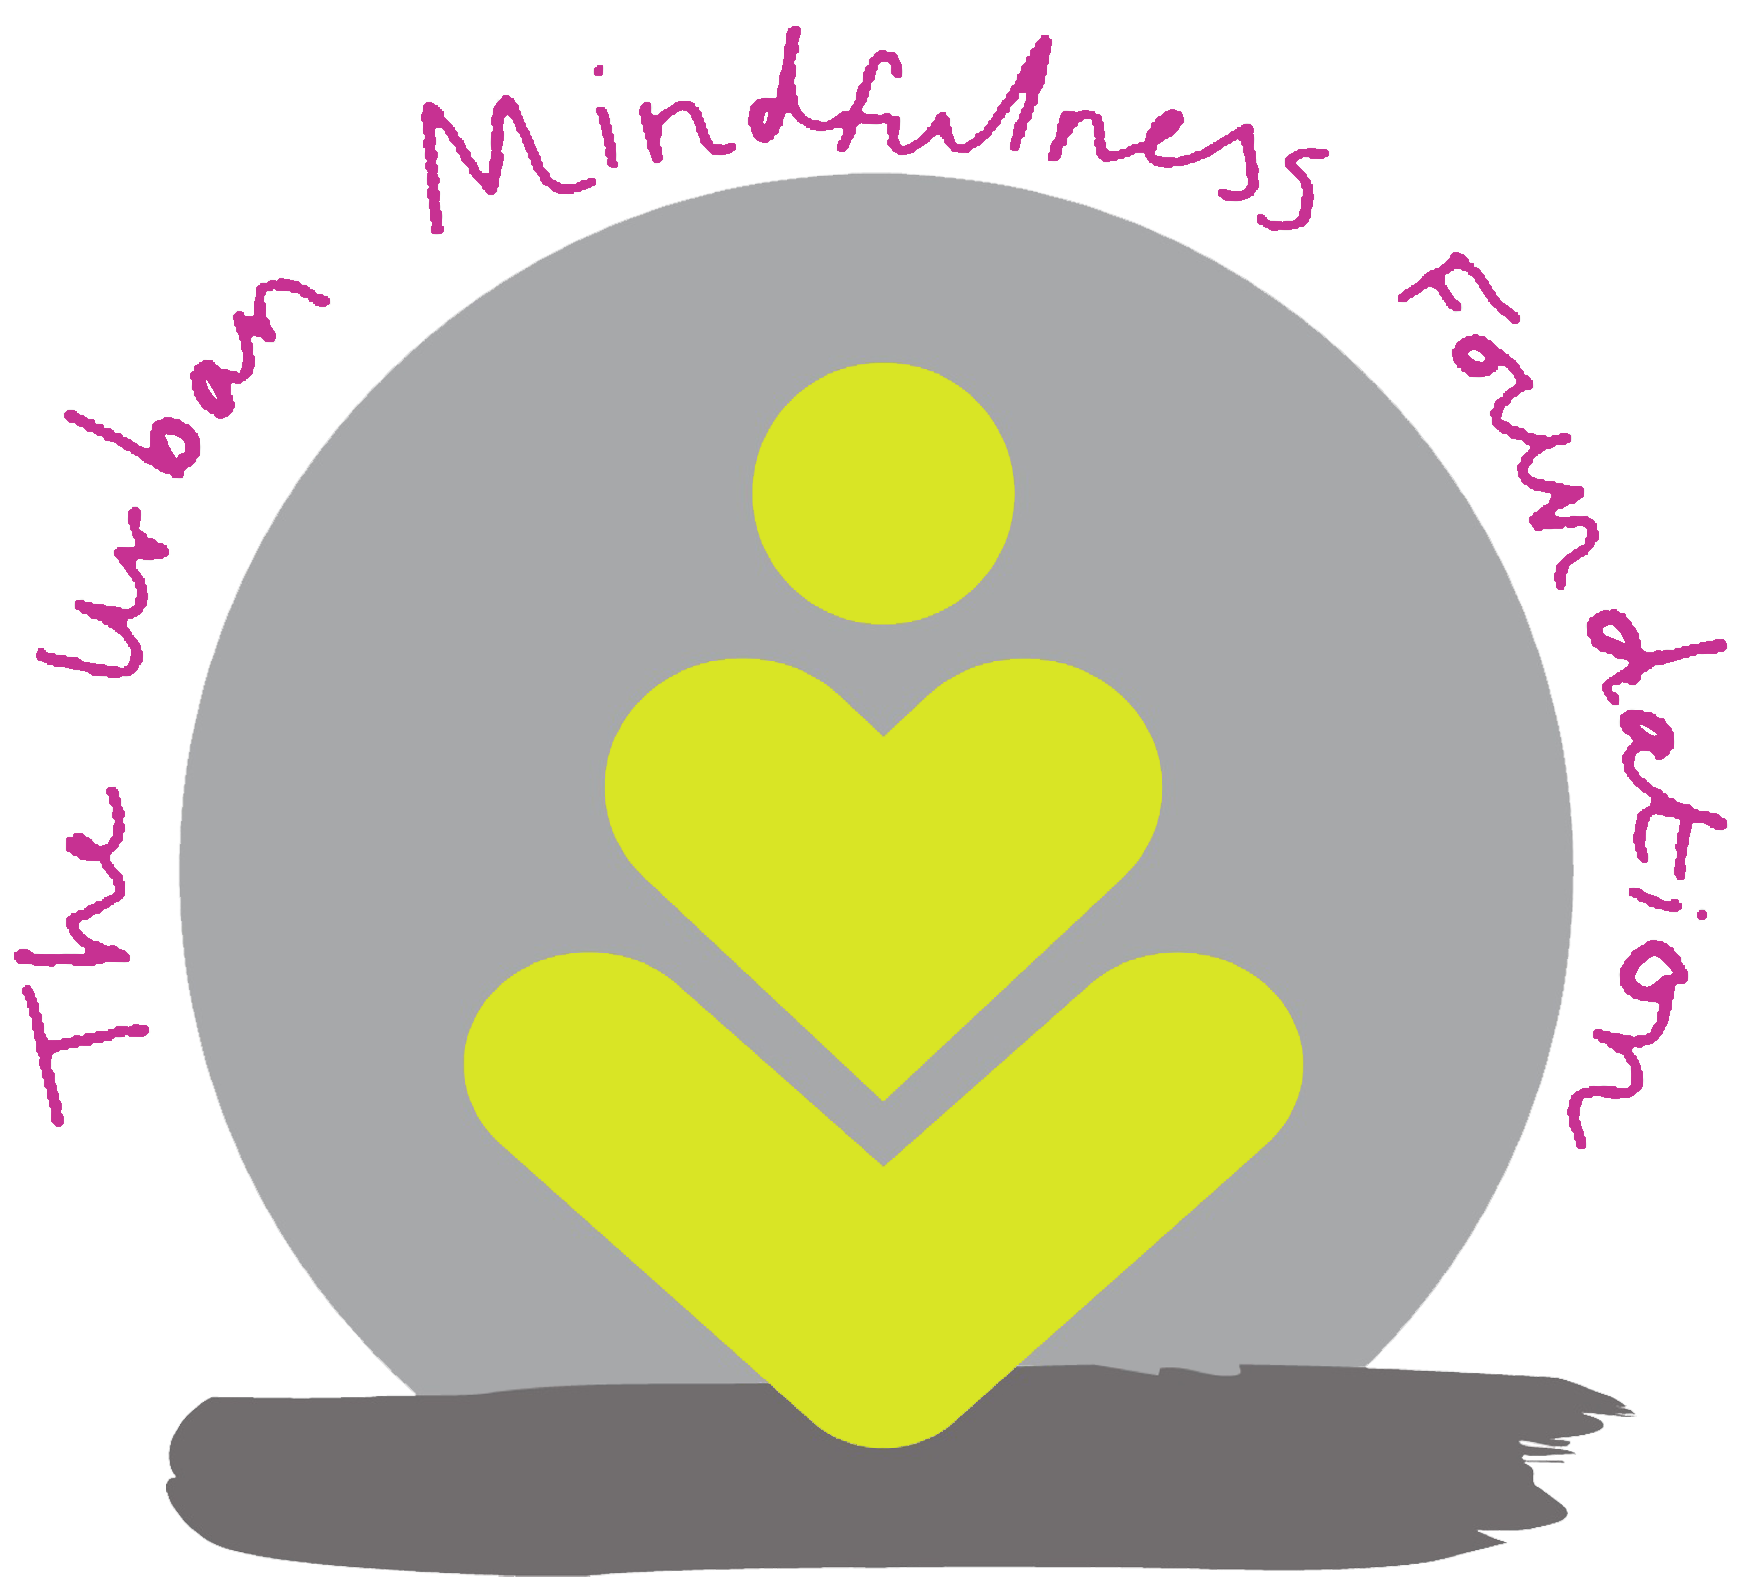 The Urban Mindfulness Foundation CIC logo